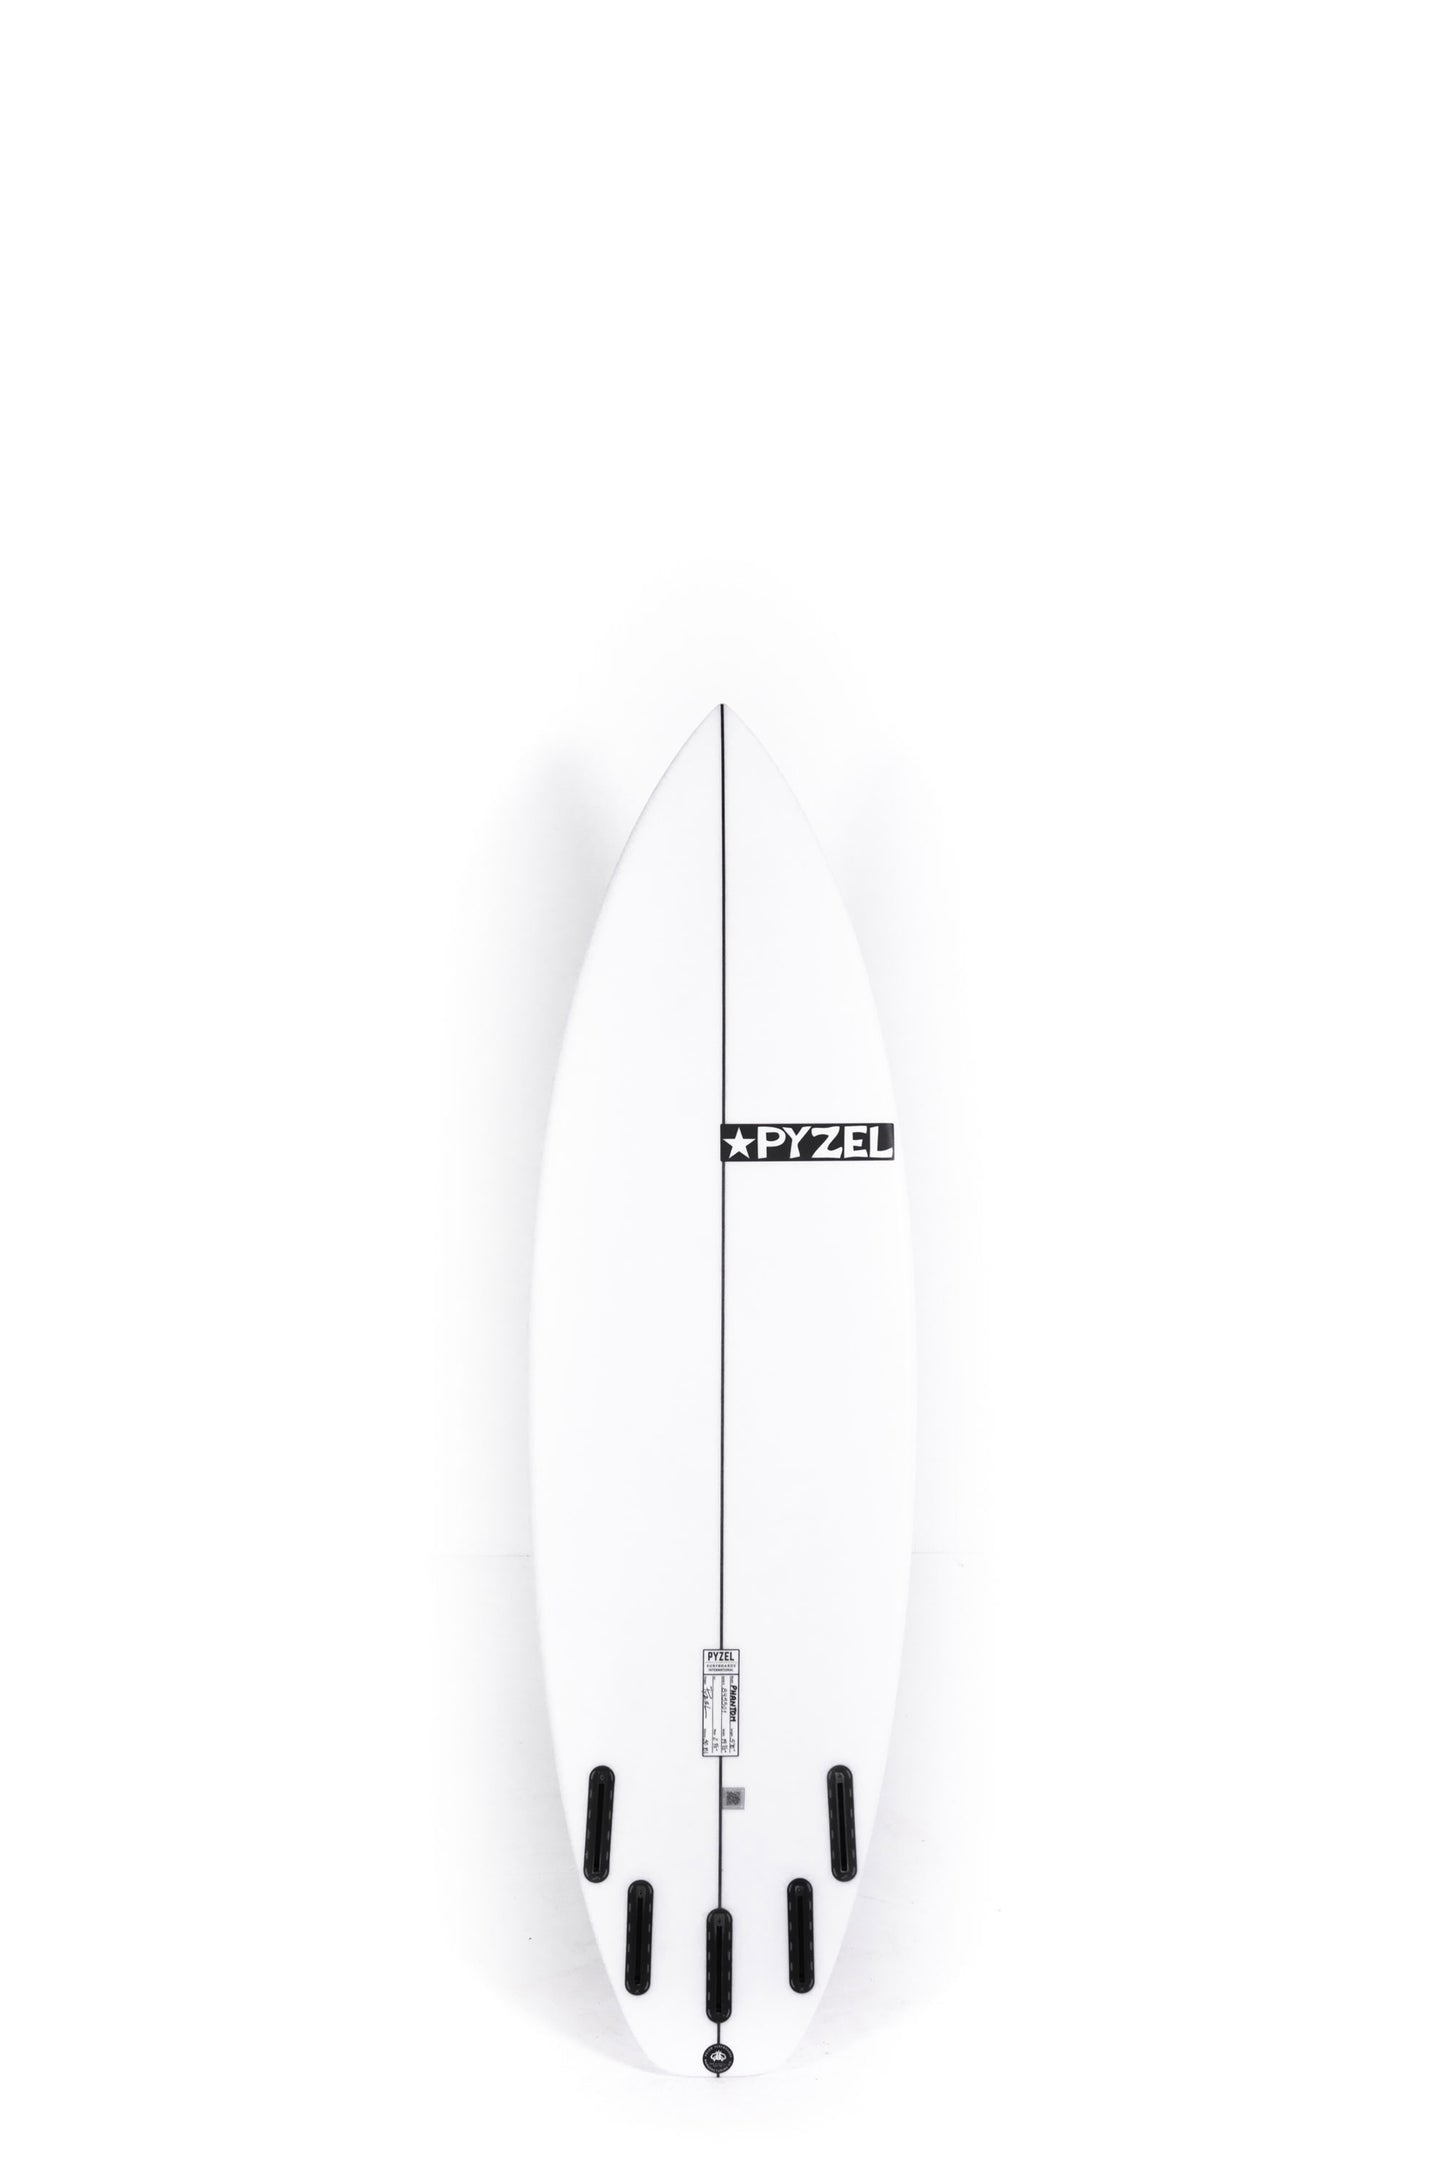 Pukas-Surf-Shop-Pyzel-Surfboards-Phantom-Jon-Pyzel-5_10